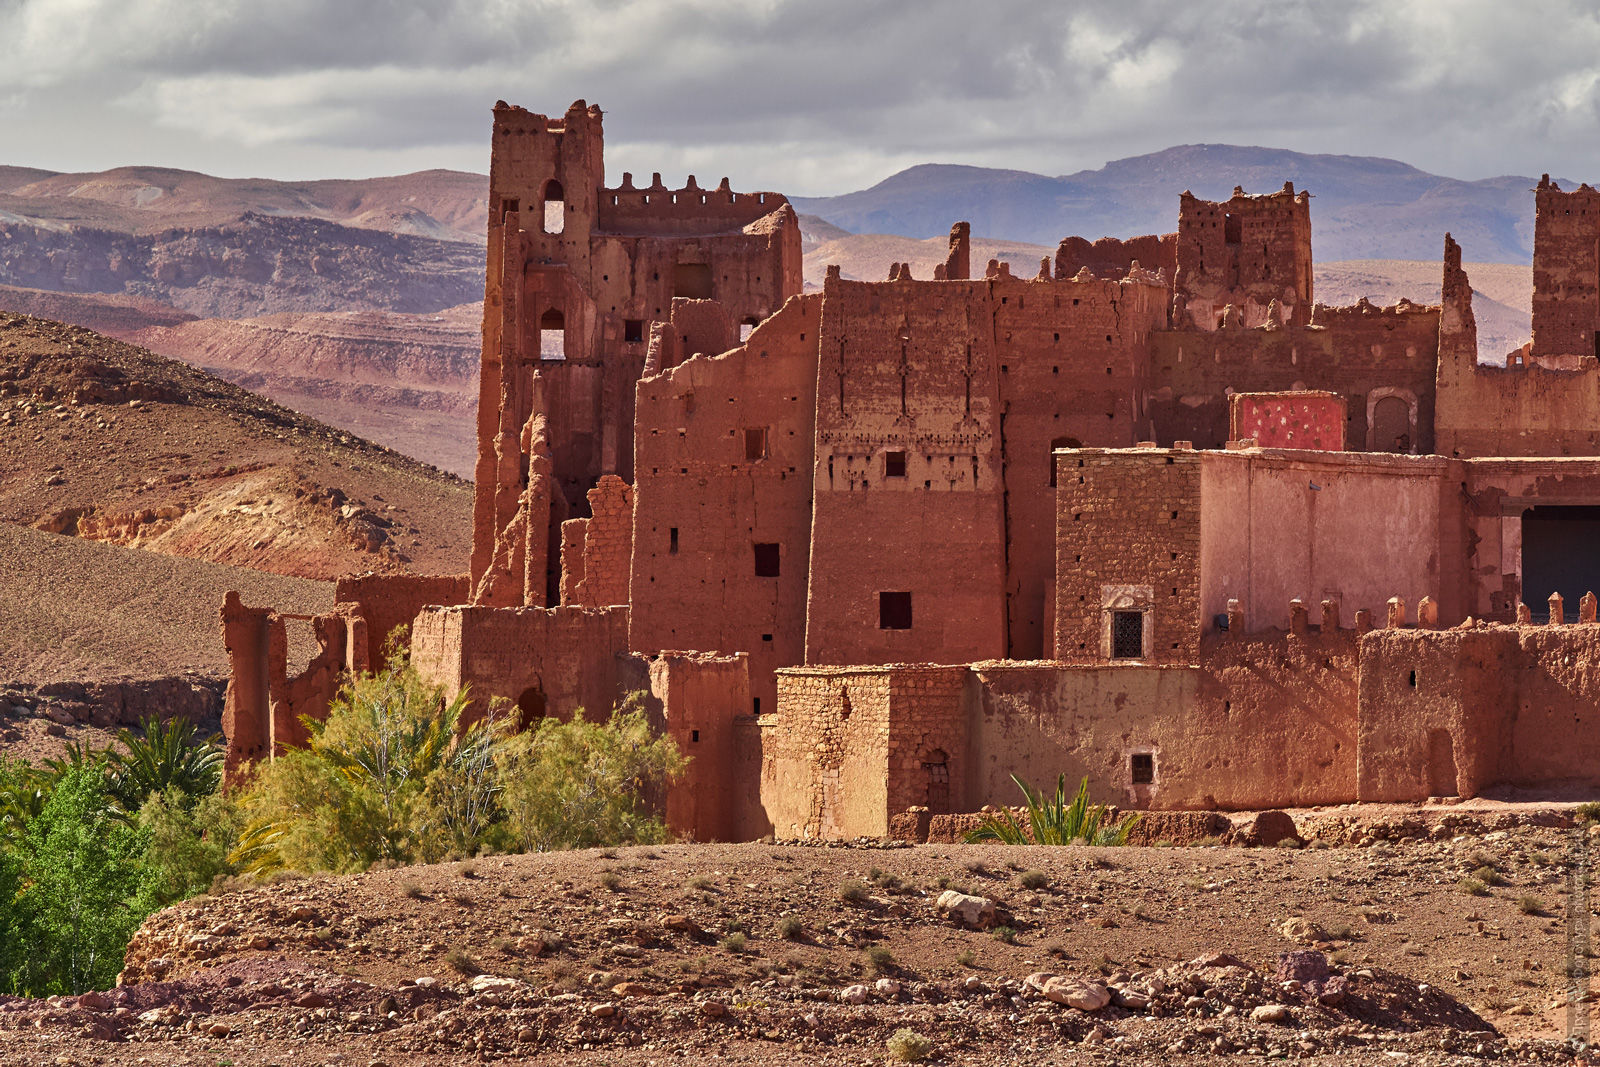 Kasbah, Morocco. Adventure photo tour: medina, cascades, sands and ports of Morocco, April 4 - 17, 2020.